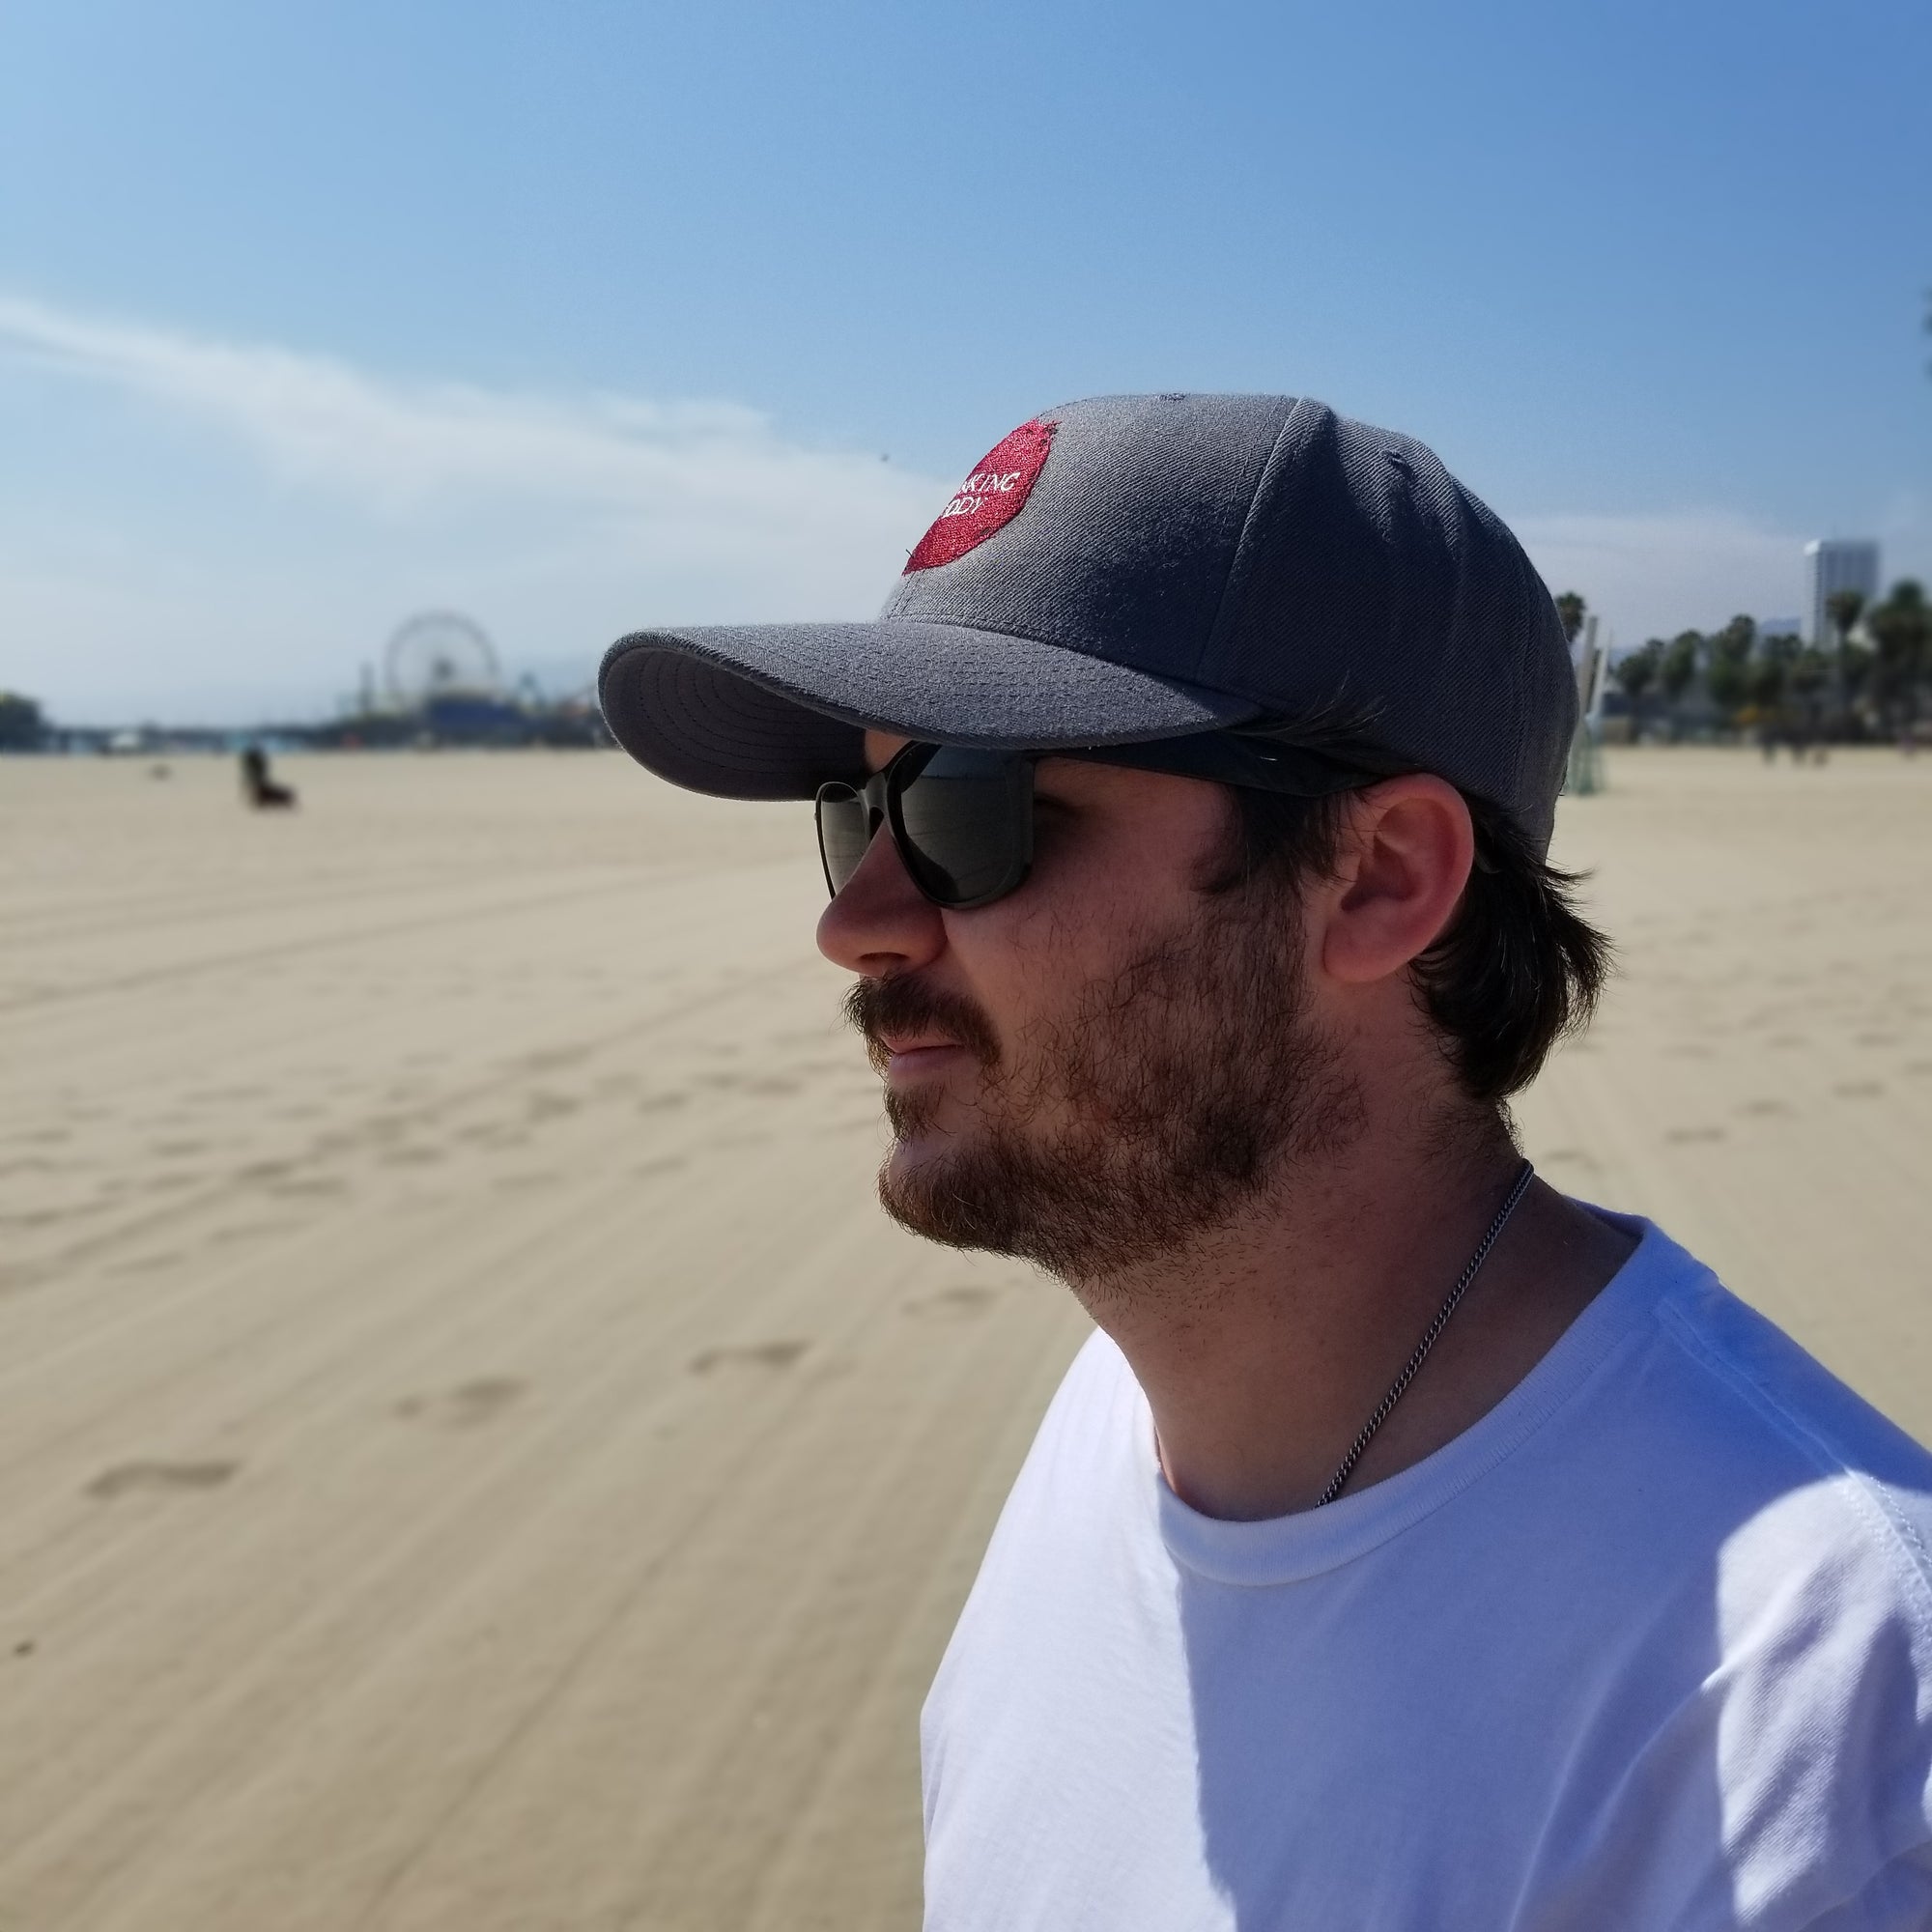 The Drinking Buddy Cap in Santa Monica